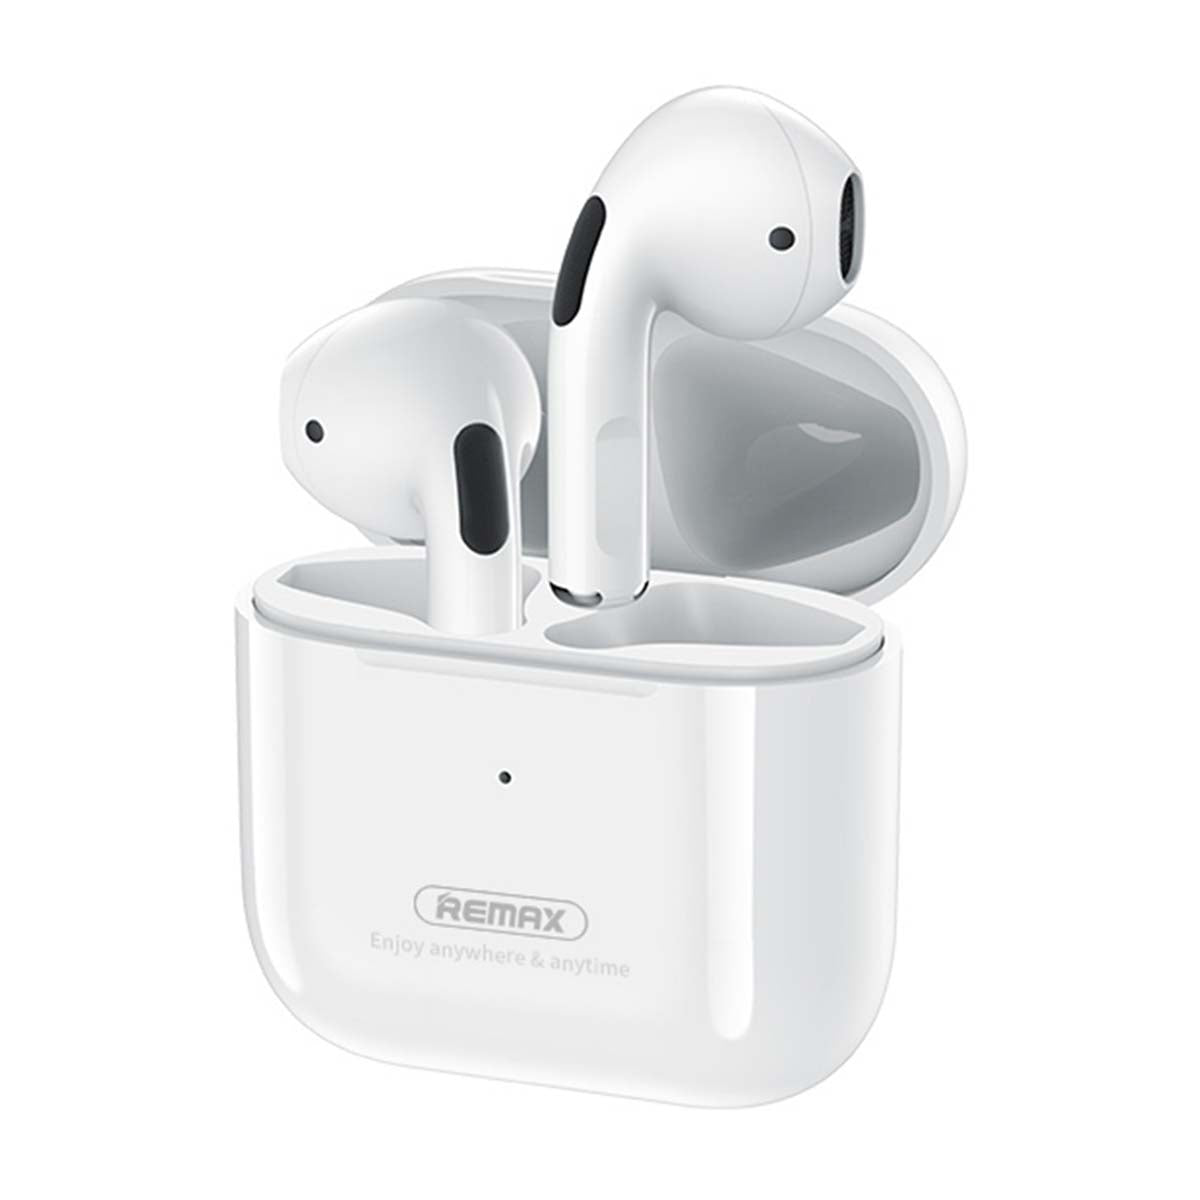 Kabellose Stereo-Musik-Ohrhörer, kabellose Ohrhörer, echte kabellose 5.1-Stereo-Musik-Ohrhörer, leichte Sport-In-Ear-Kopfhörer